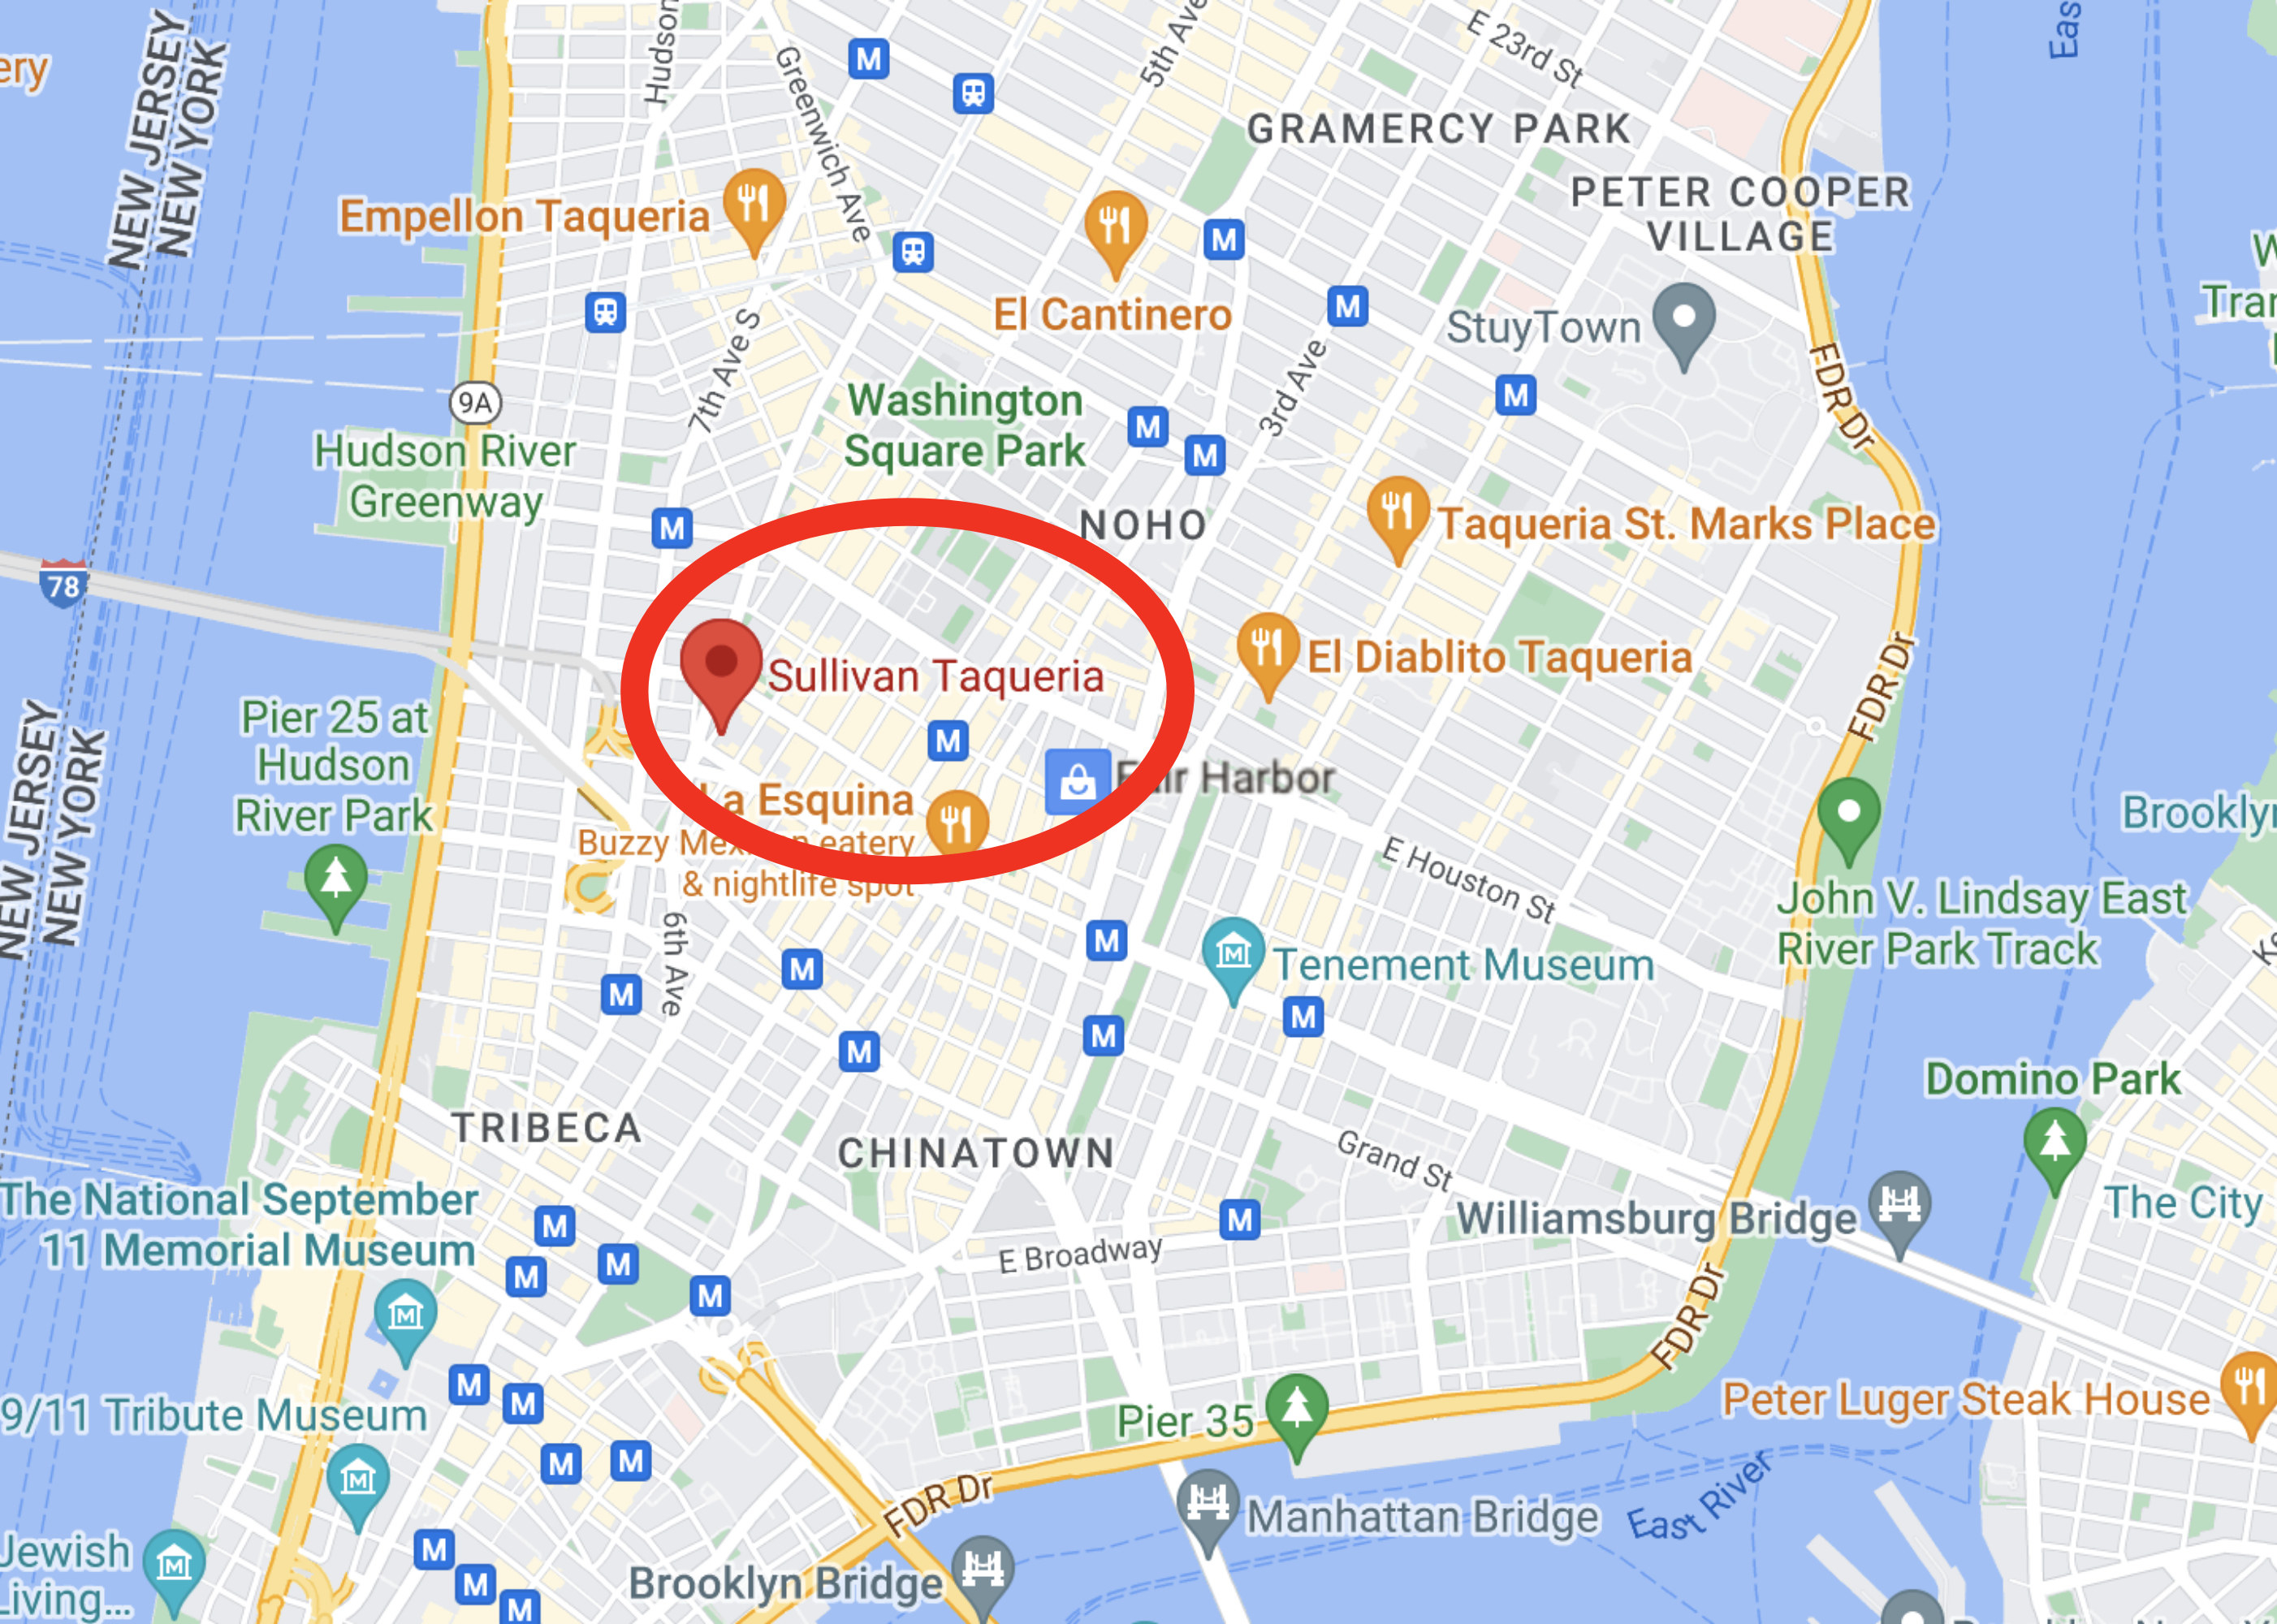 Sullivan Taqueira circled on a map